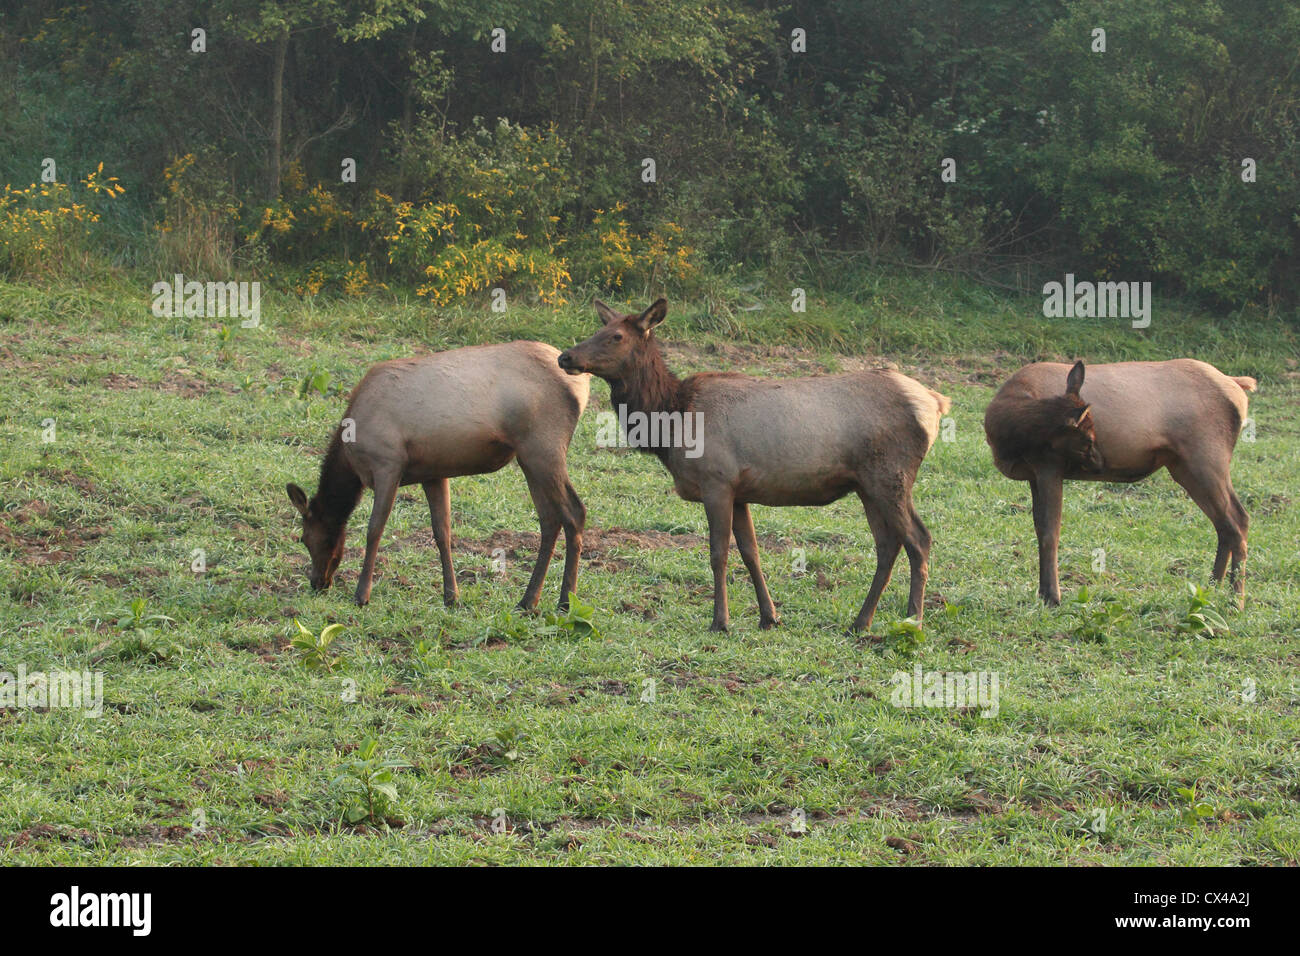 Three cow elk in a field. Stock Photo